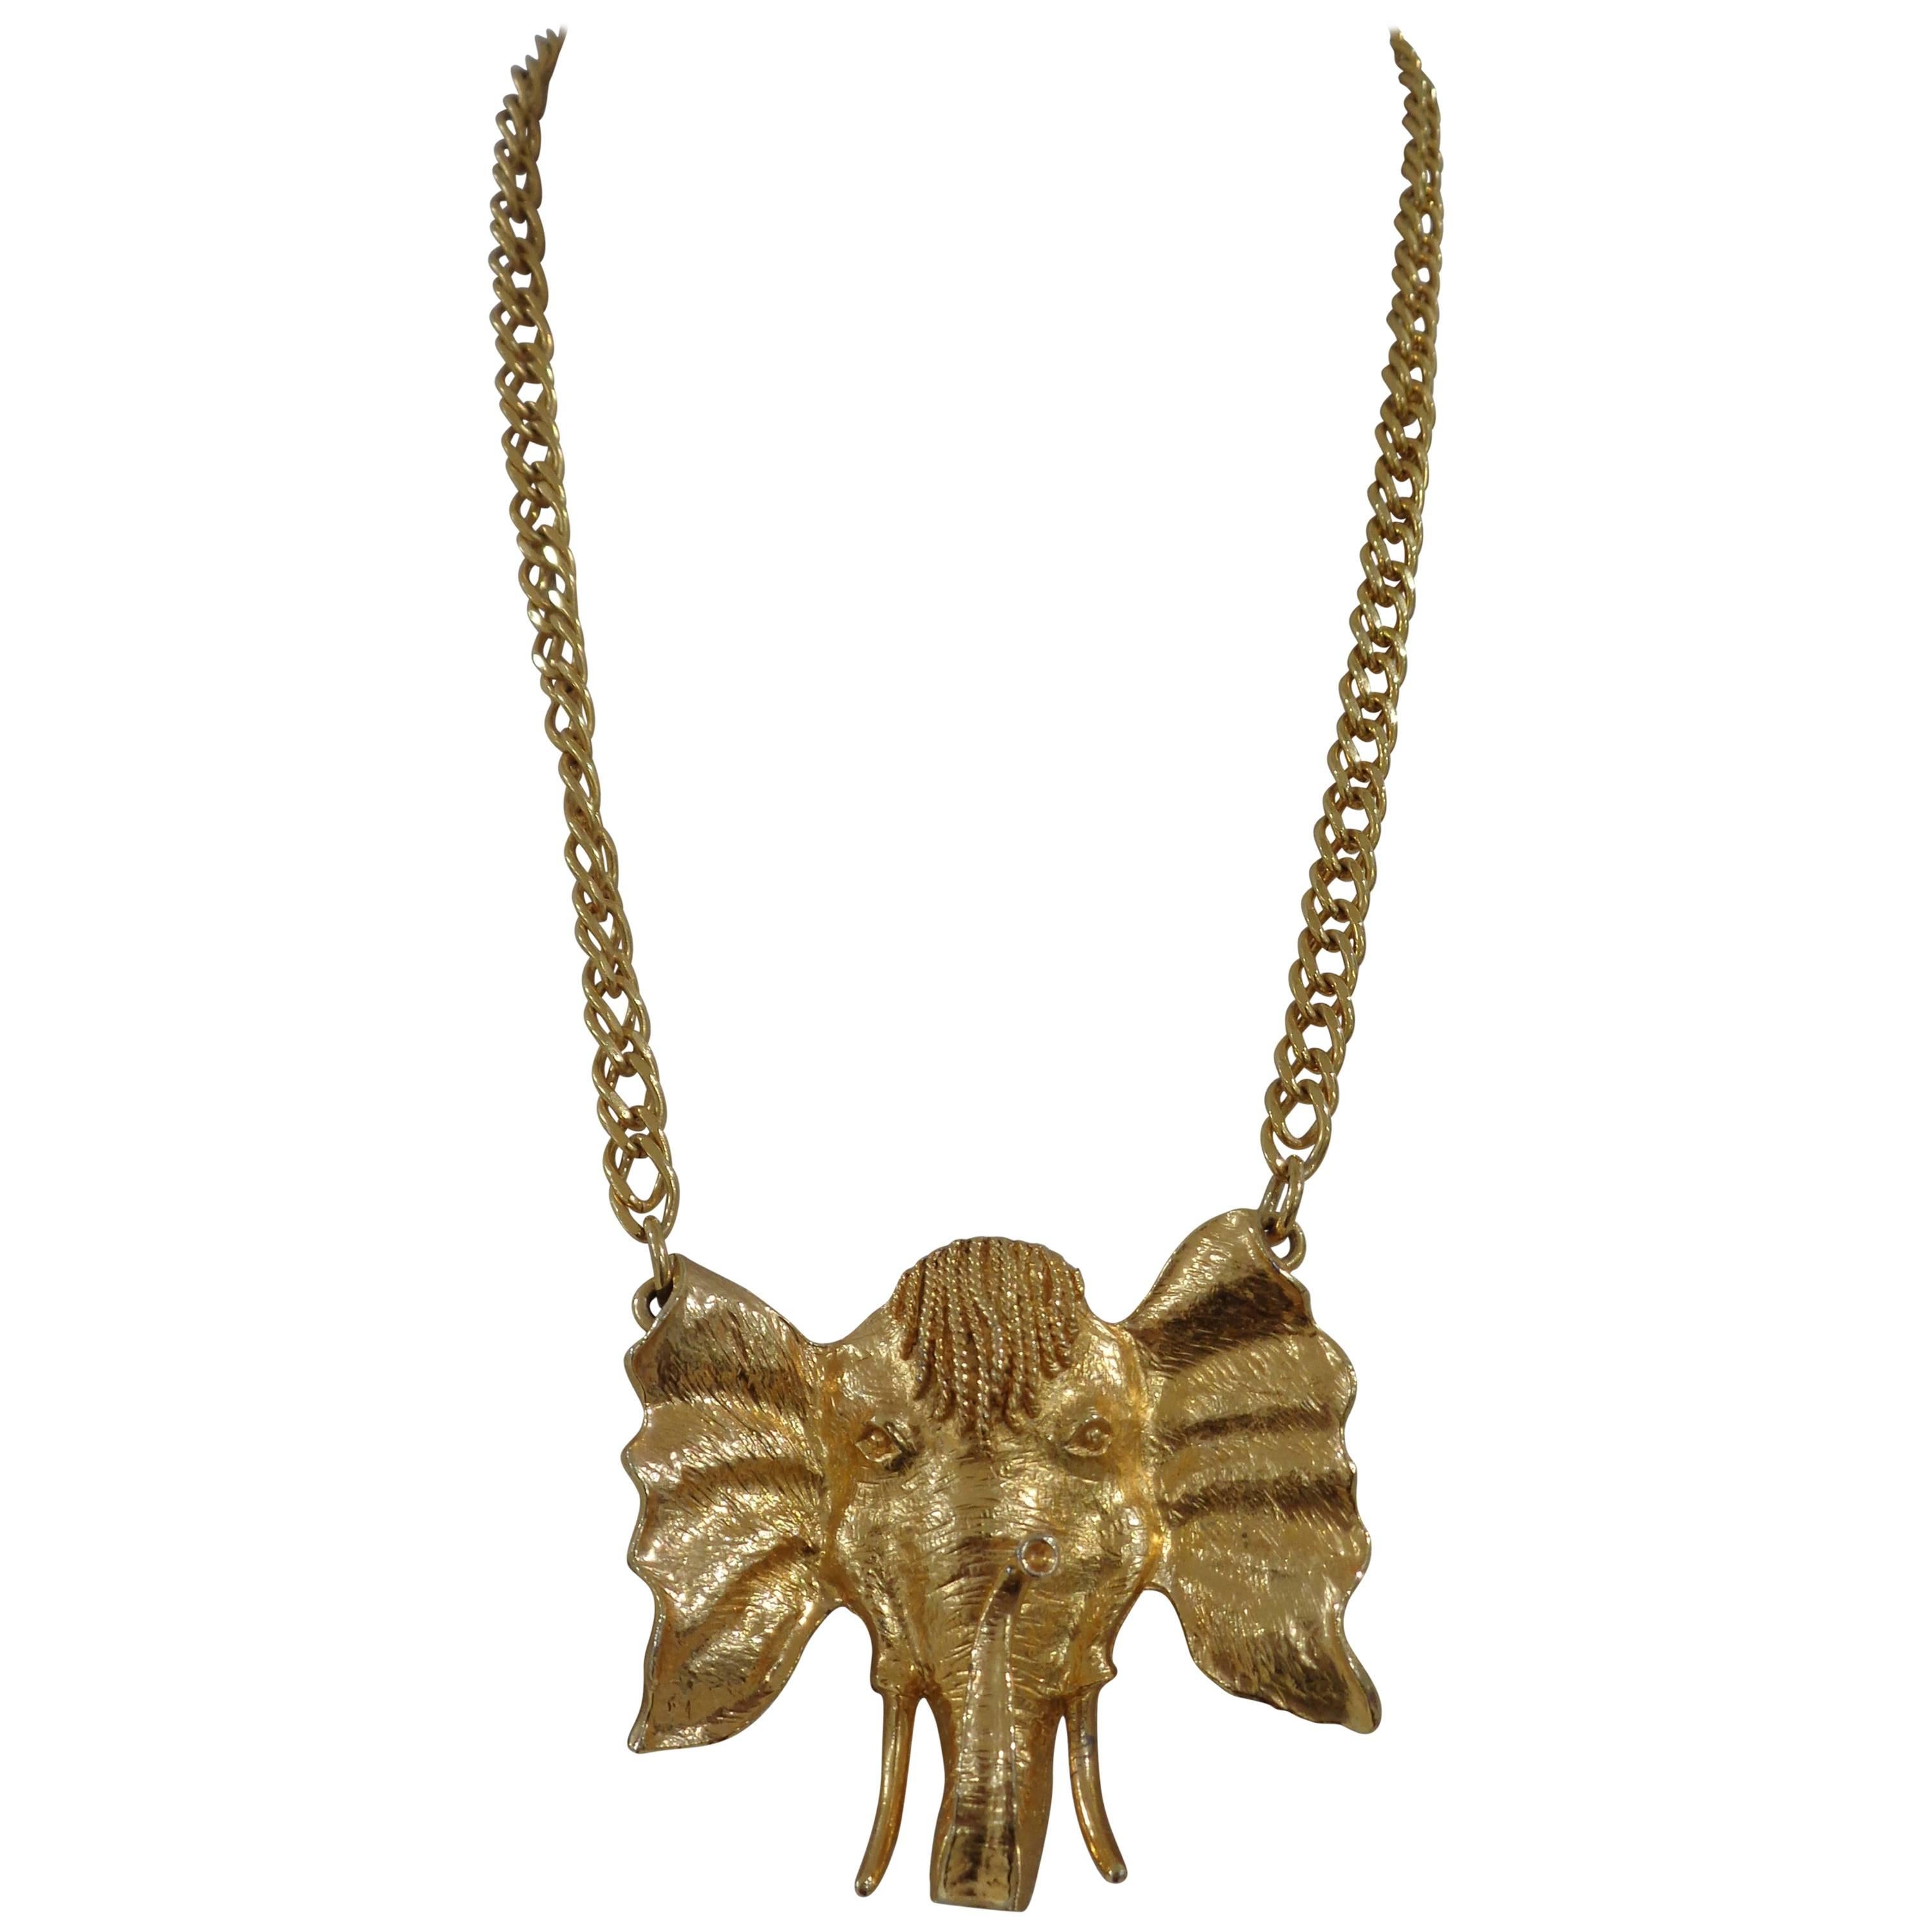 1970s Gold tone elephant pendant necklace